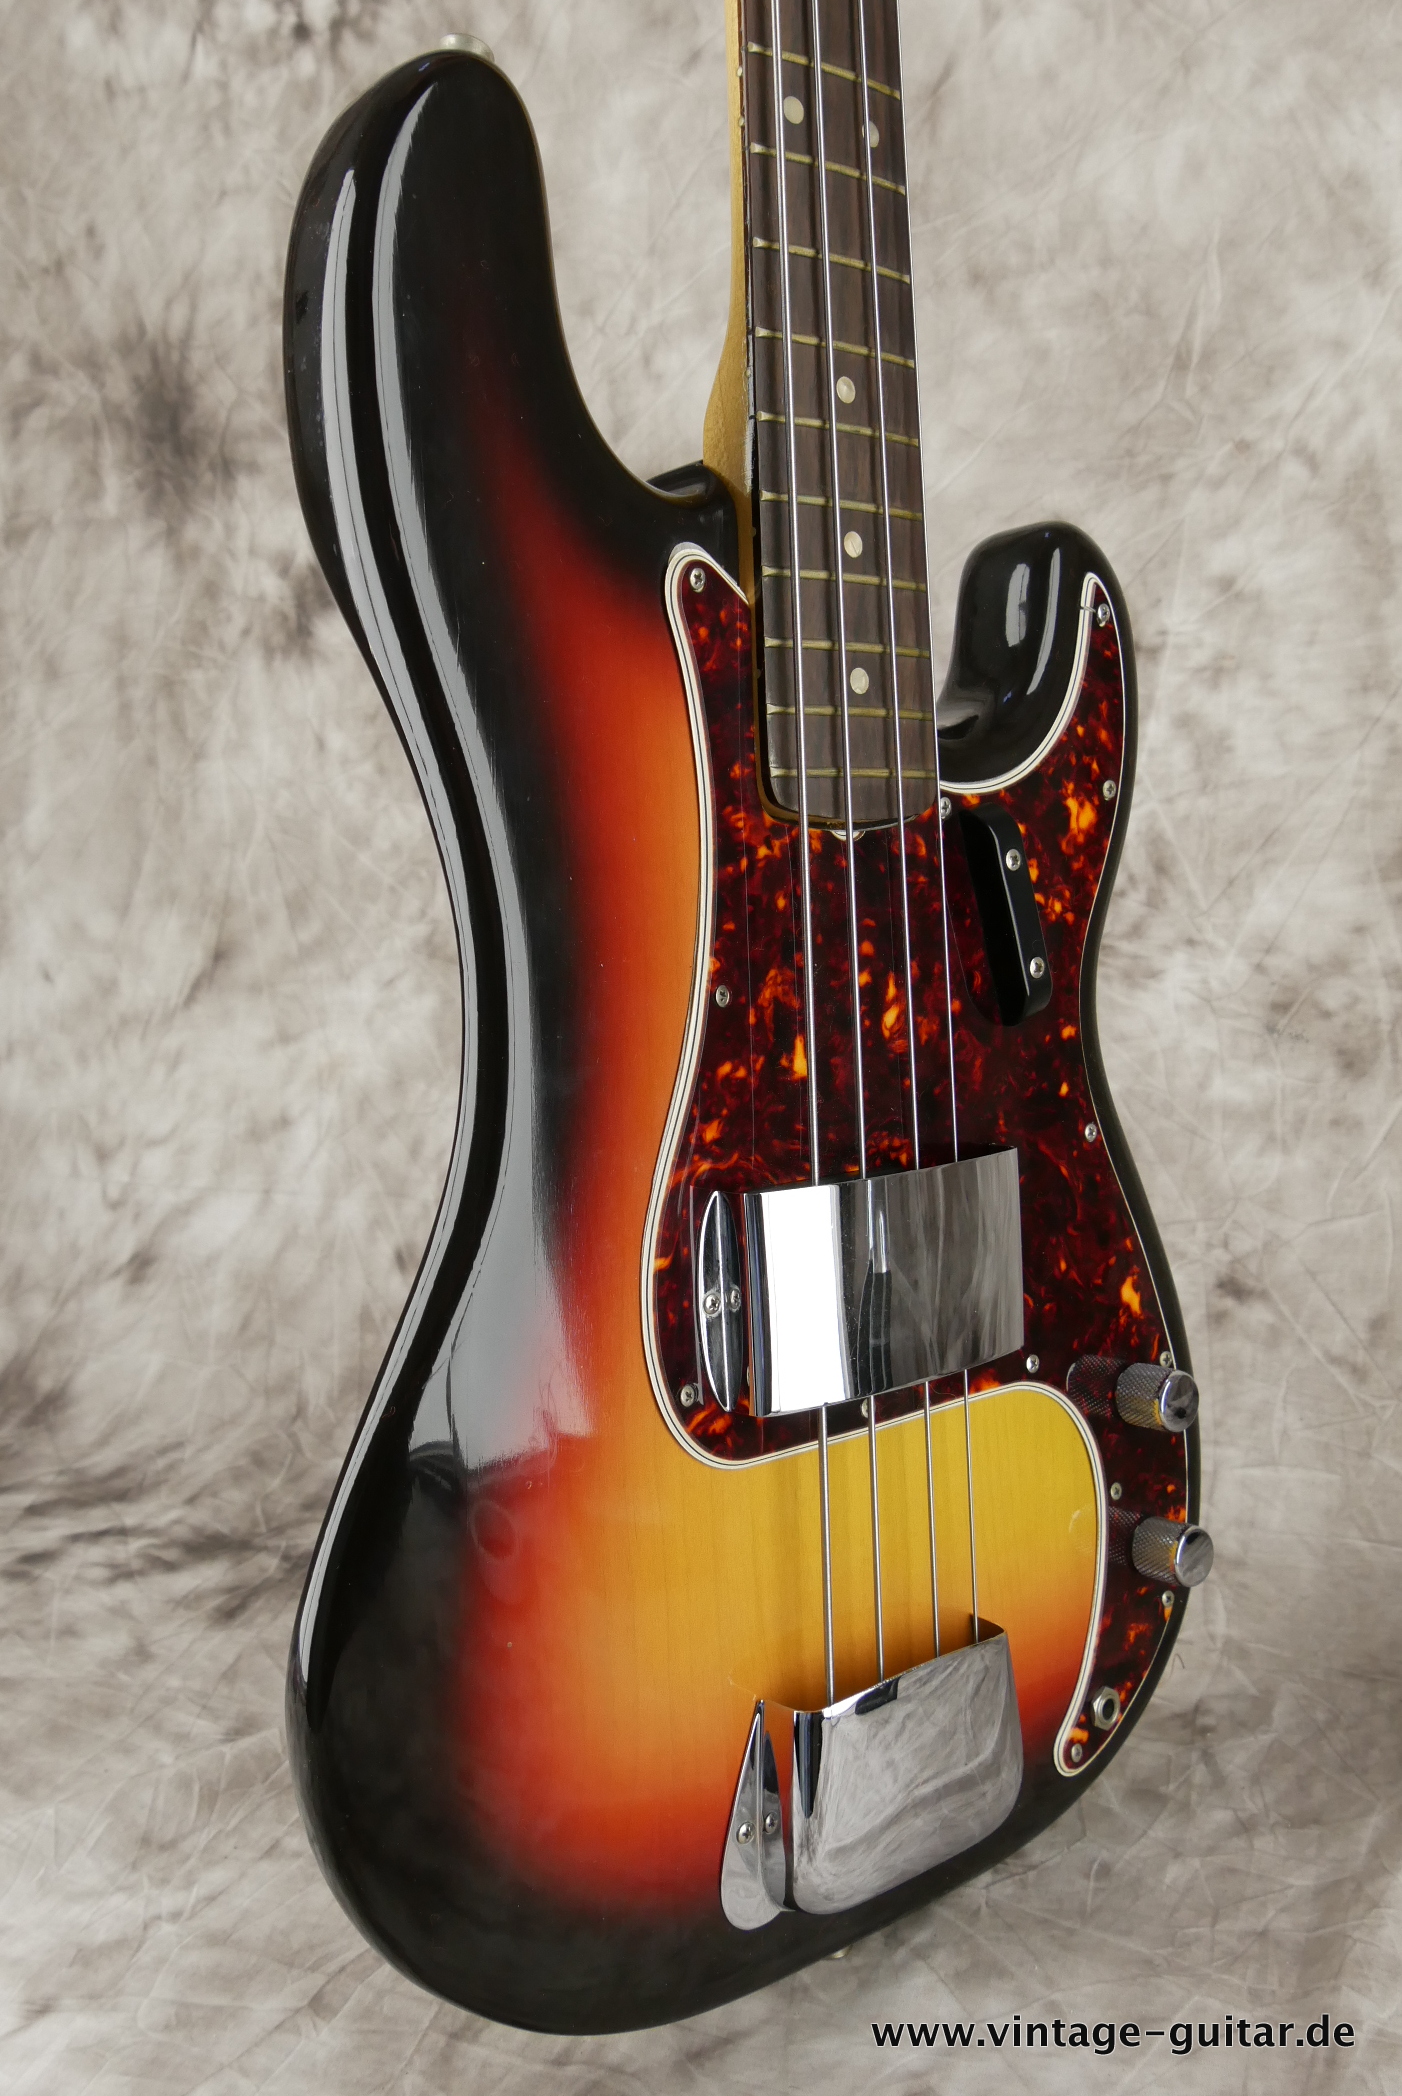 Fender-Precision-Bass-1965-sunburst-mint-condition-005.JPG